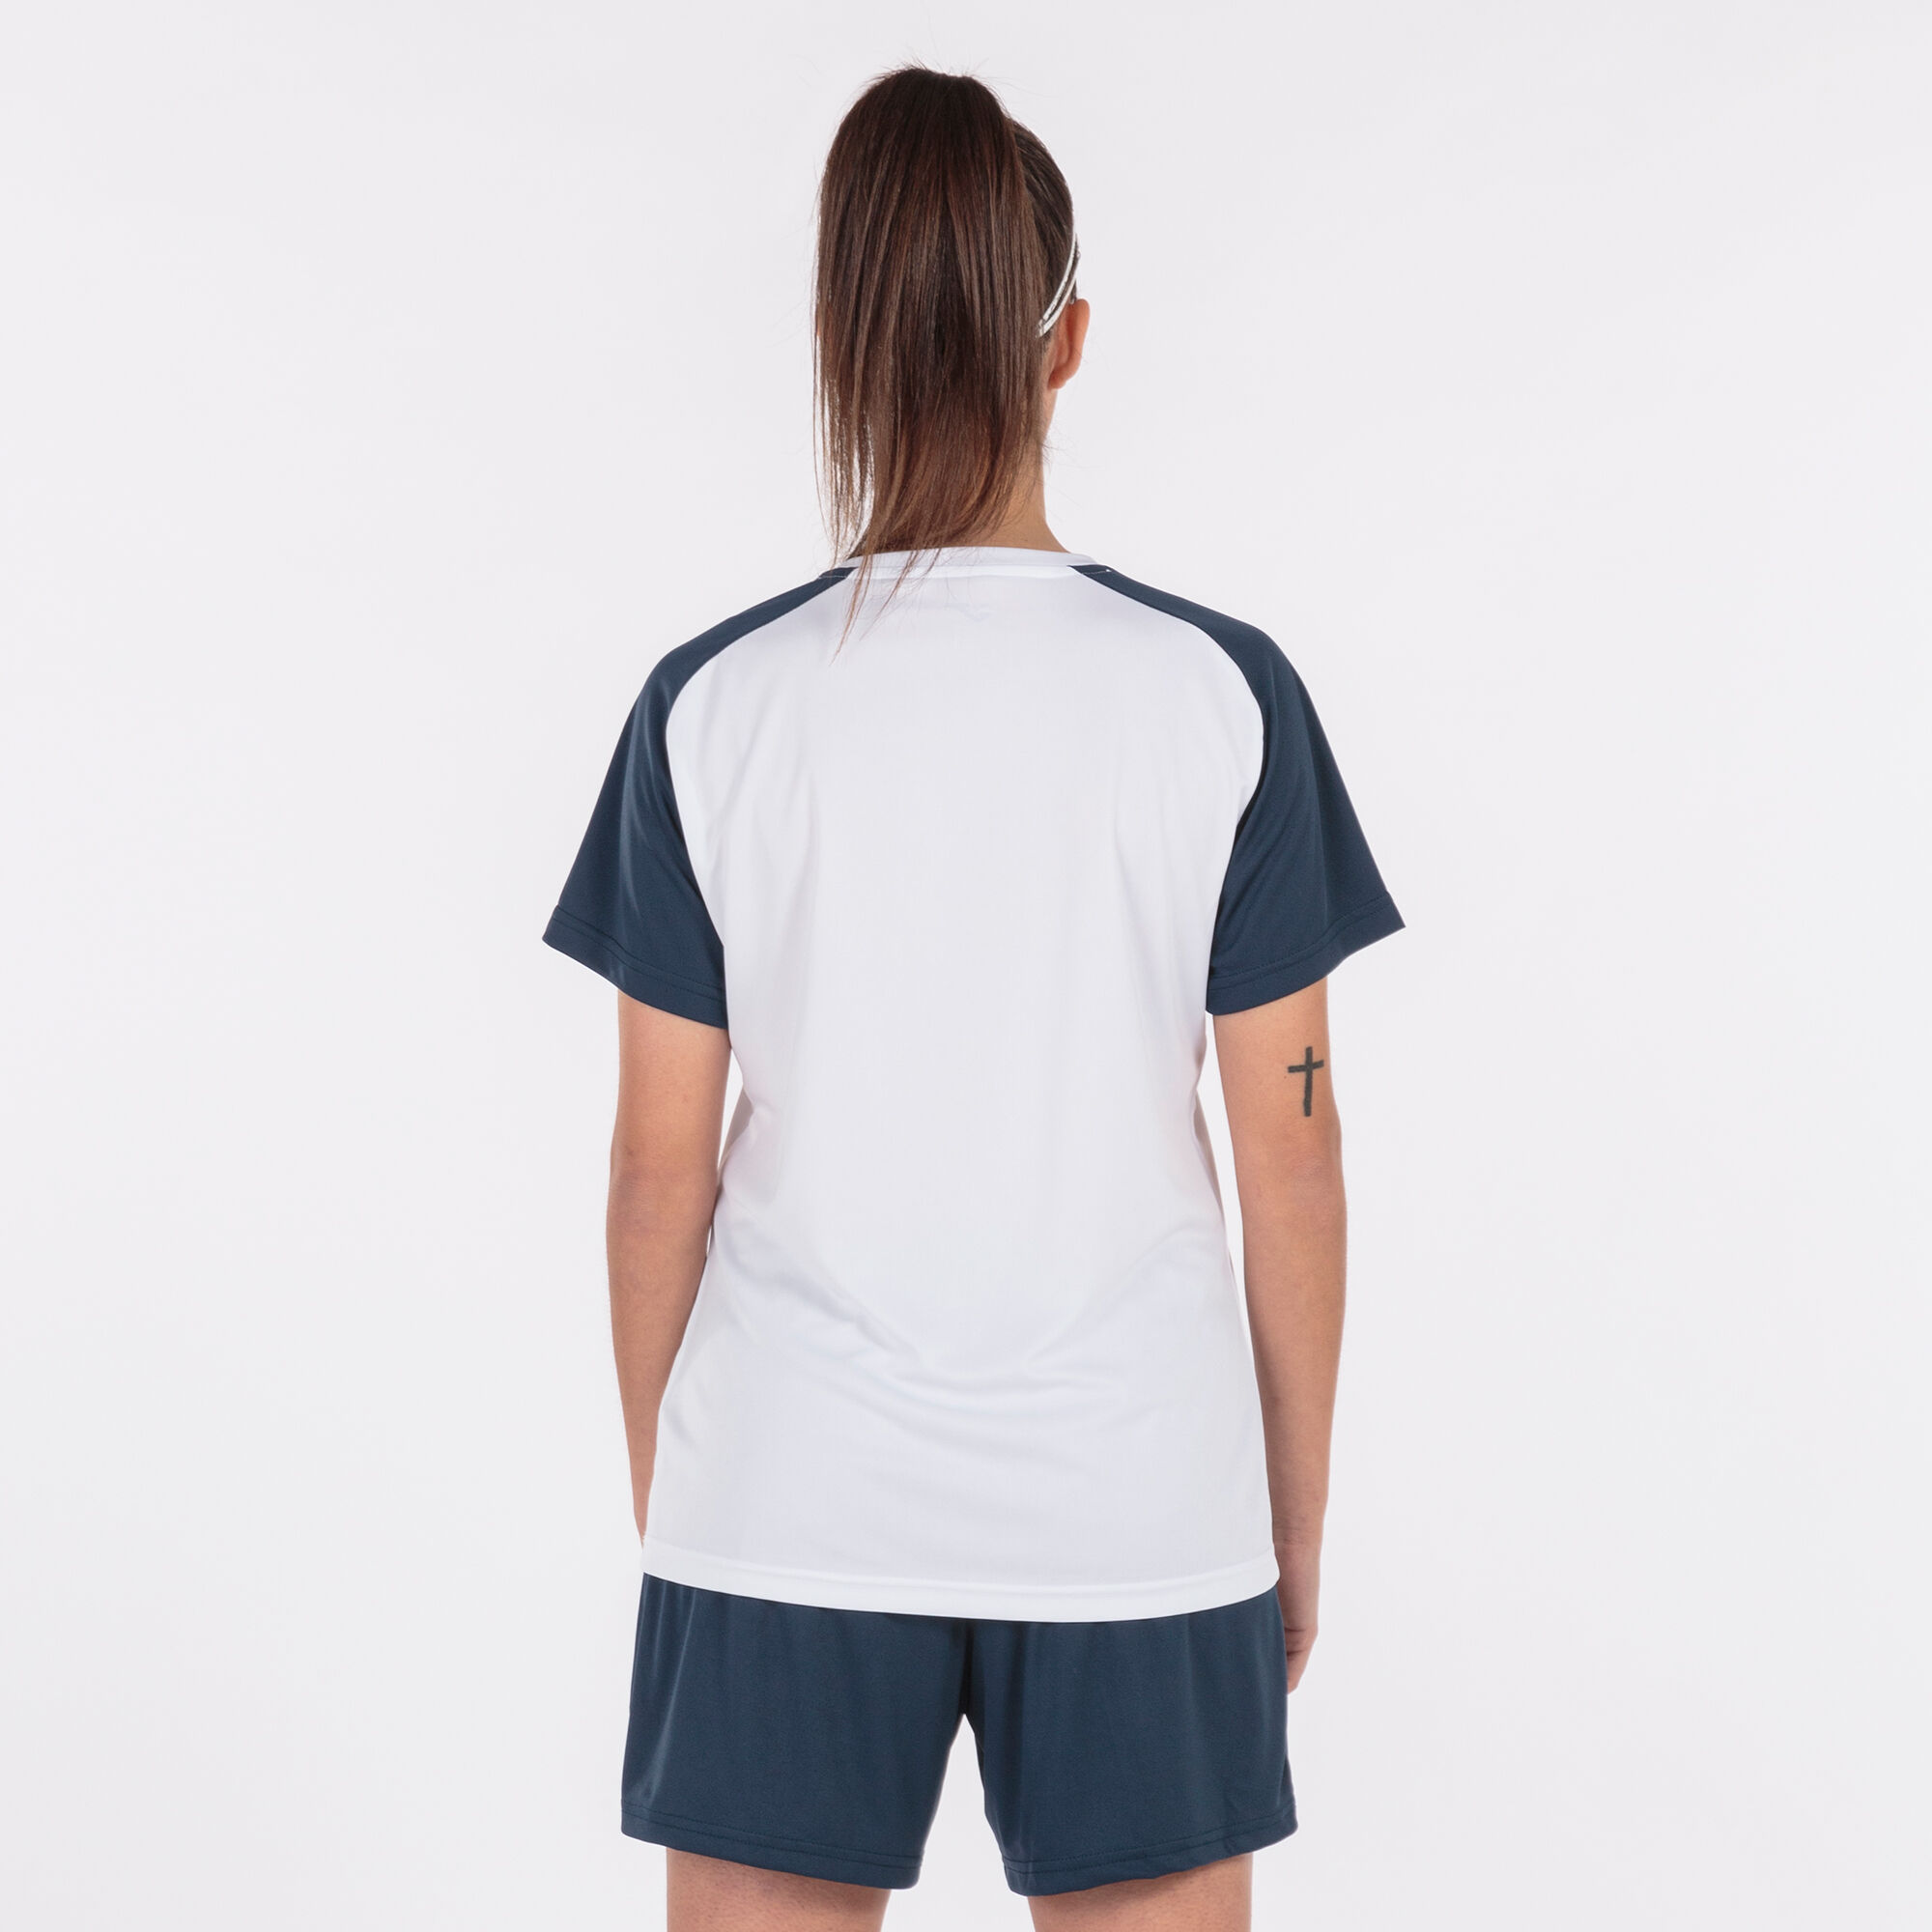 Camiseta manga corta mujer Academy IV blanco marino